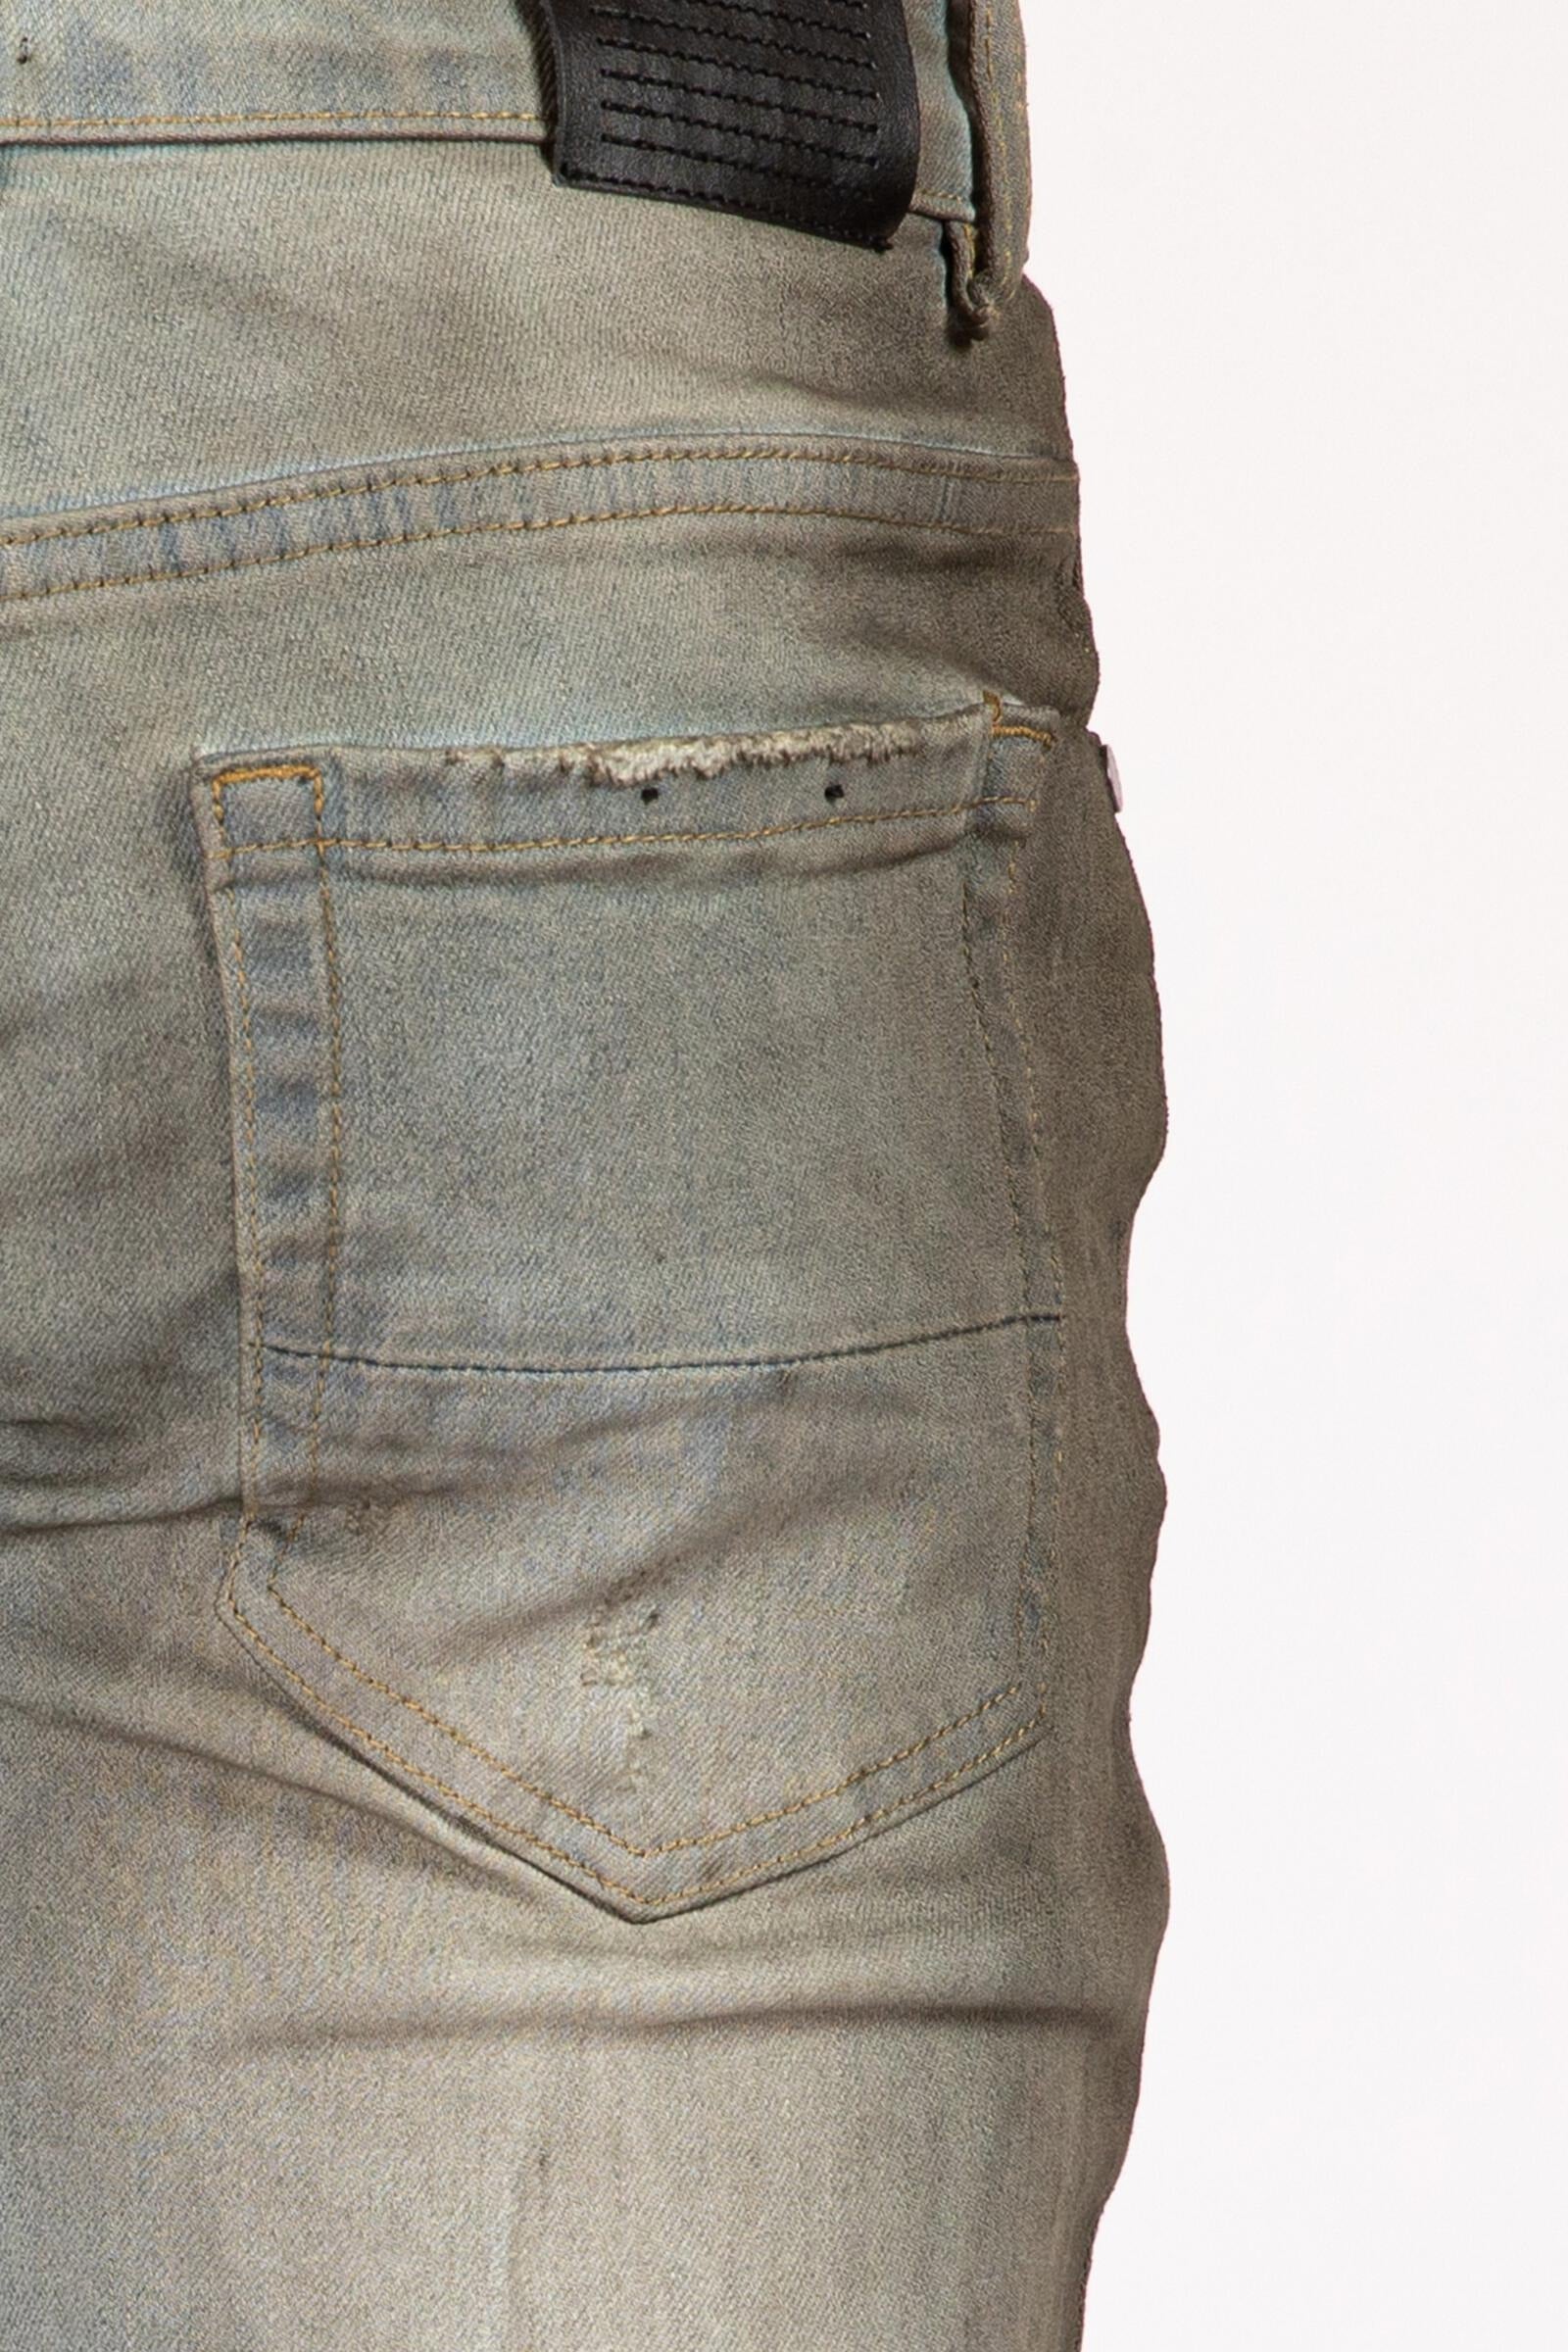 SERENEDE ZINC1 Zinc Jeans